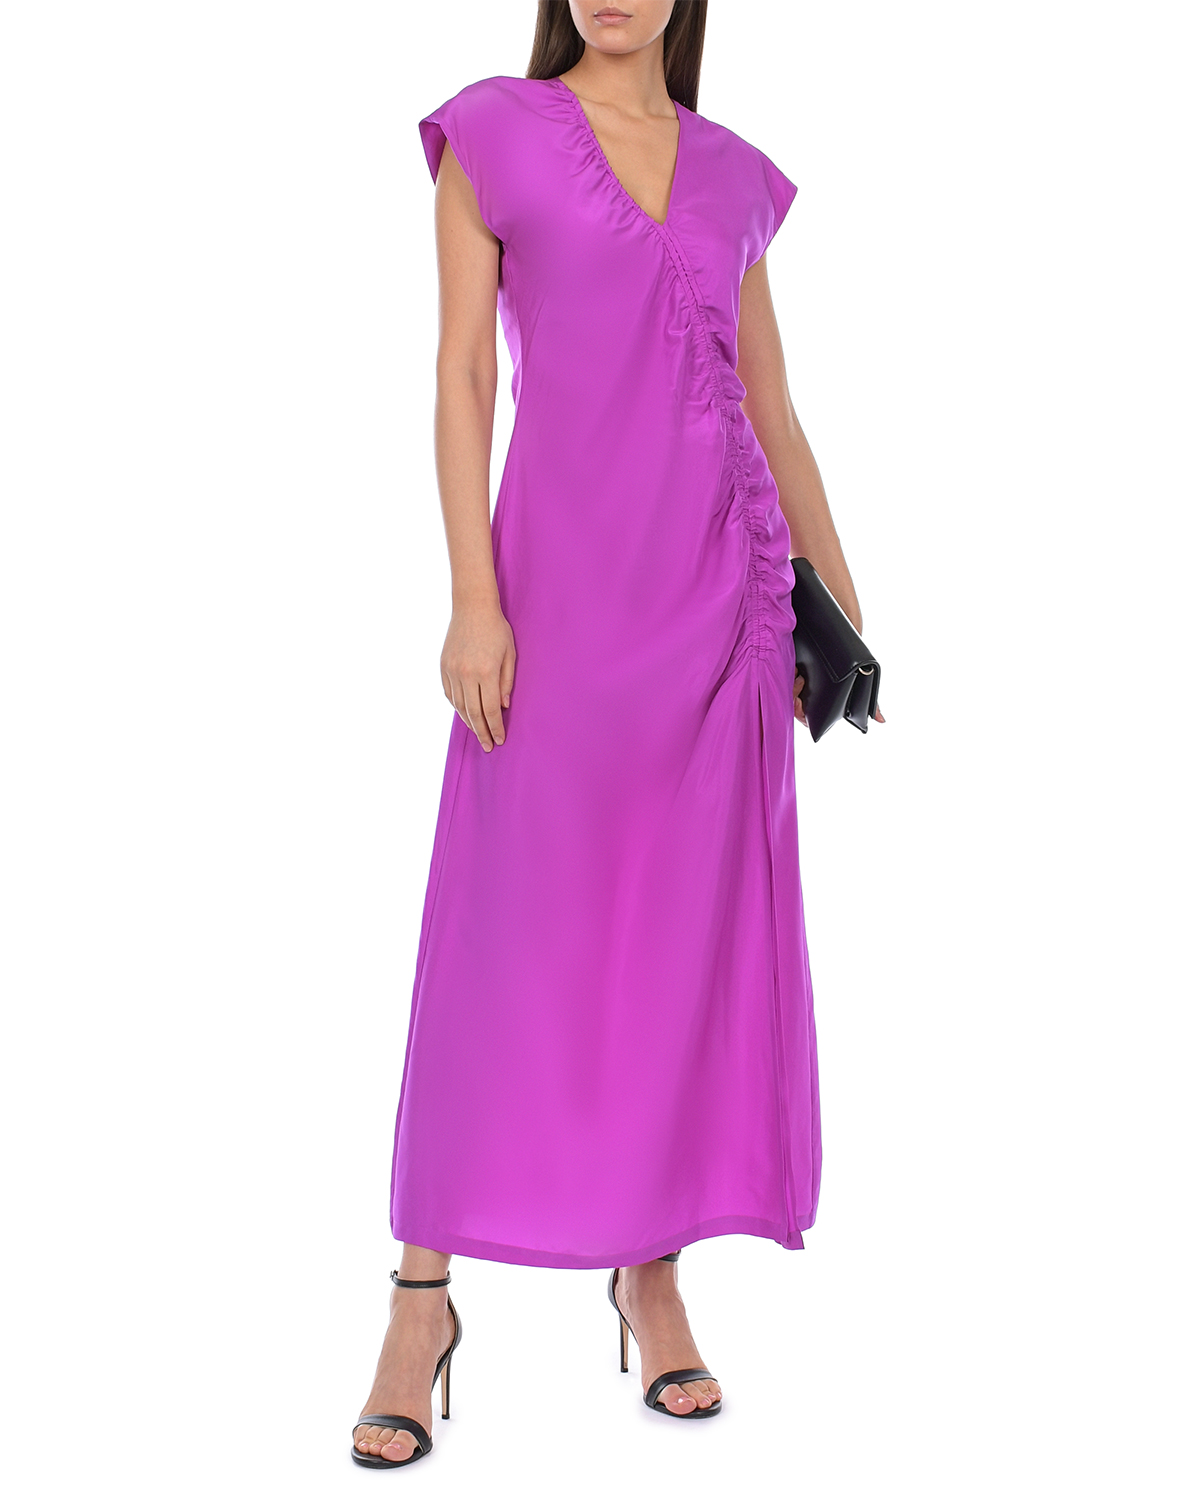 Шелковое платье цвета фуксии ROHE, размер 42 - фото 2